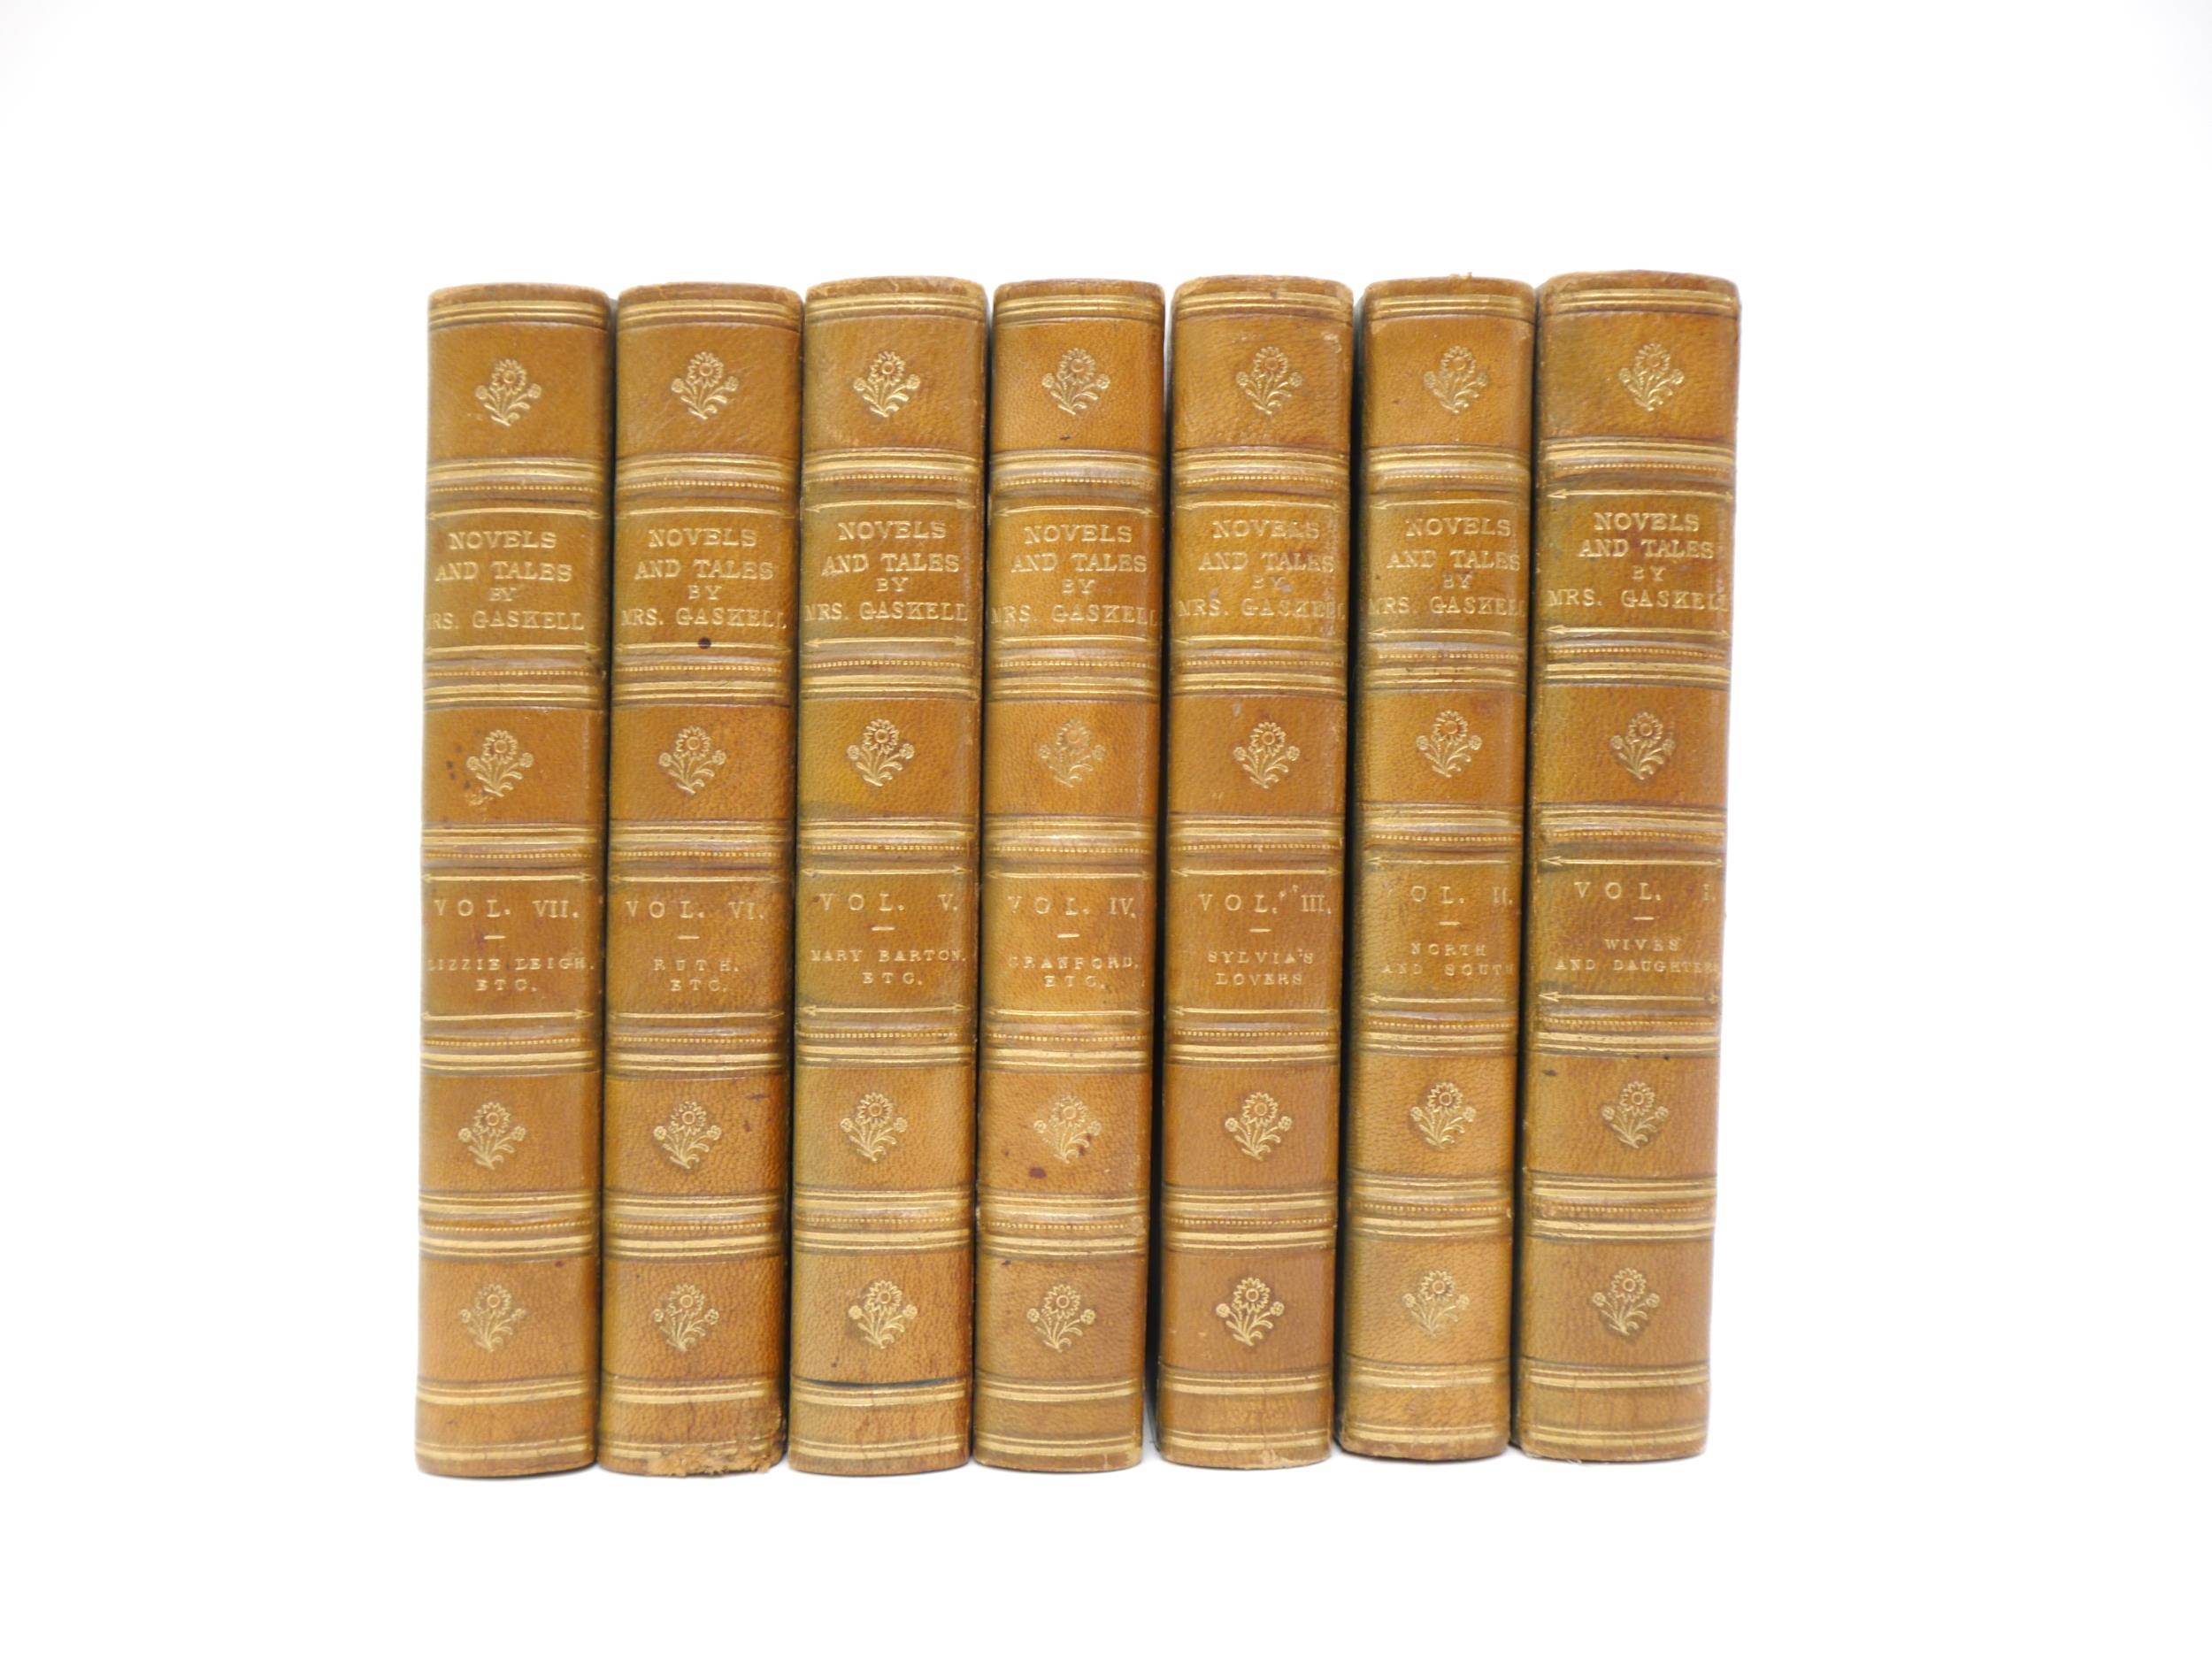 (Sotheran & Co Binding.) Elizabeth Gaskell: 'Novels and Tales', London, Smith Elder, 1882-1888, 7